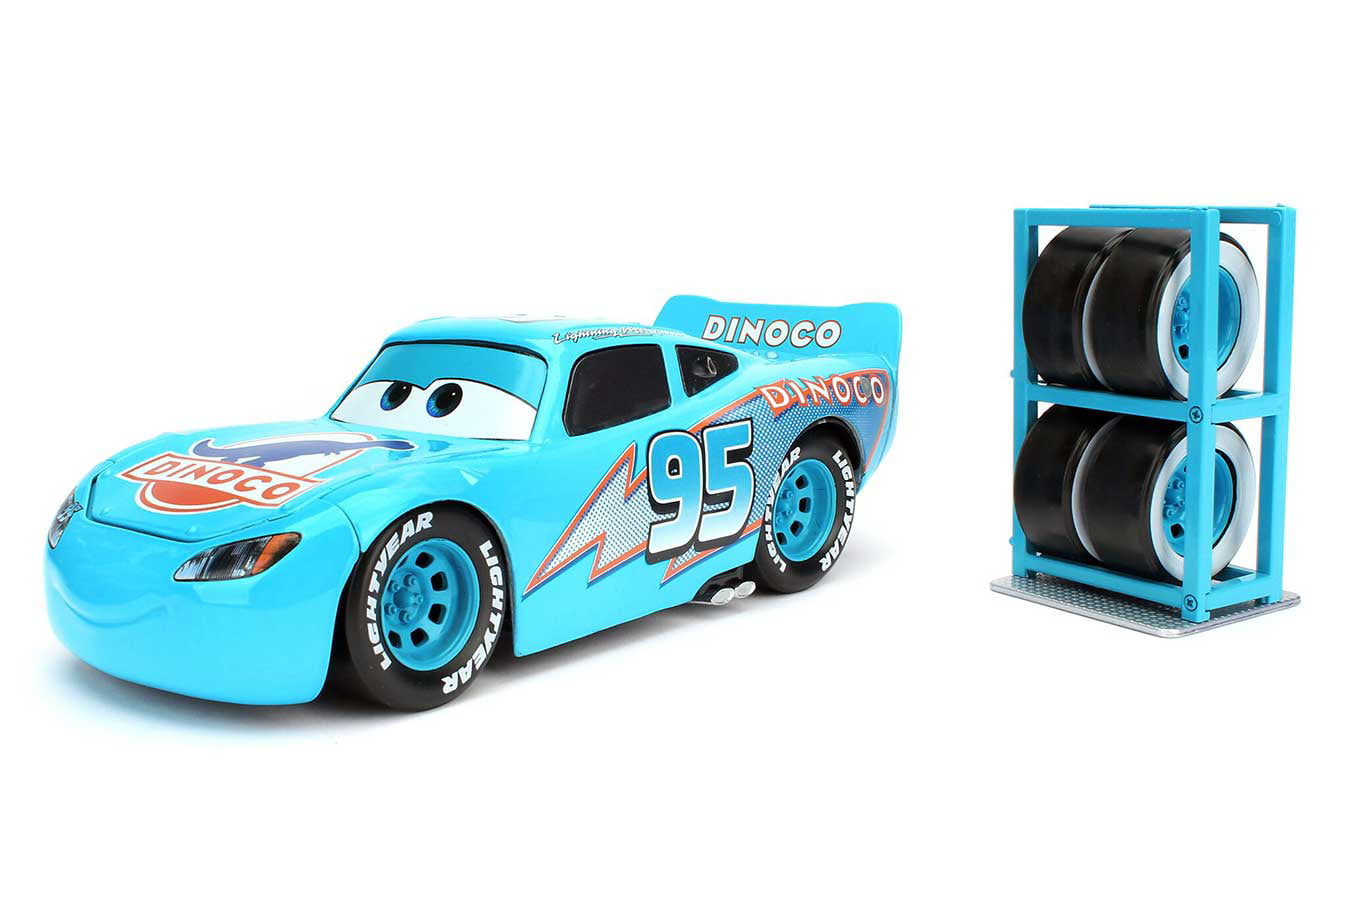 Disney Pixar Cars 124 Dinoco Lightning Mcqueen Die Cast Car With Tire